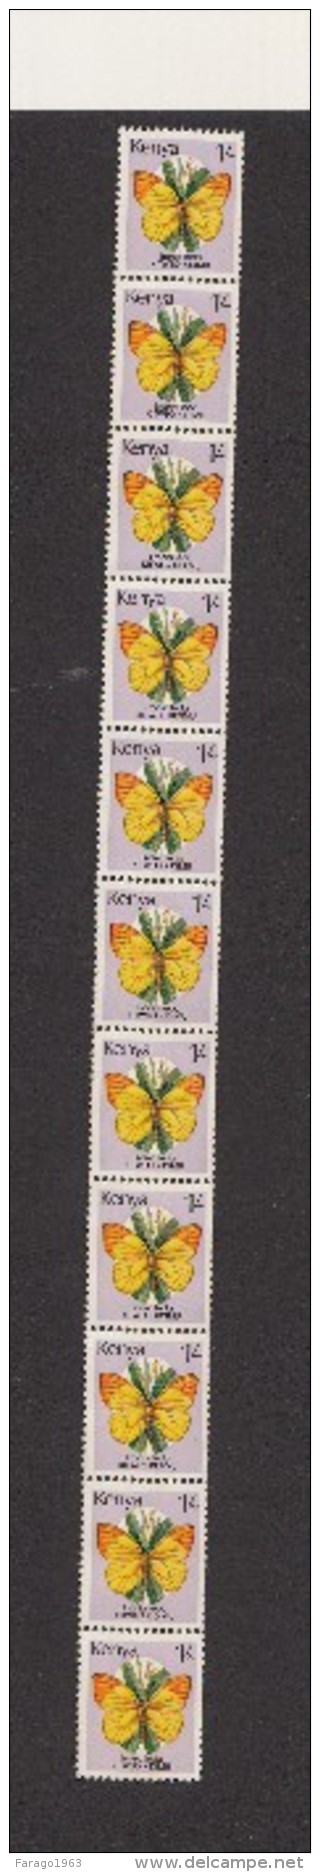 1988 KENYA Butterflies 1/- COIL Strip Of 11 - Kenia (1963-...)